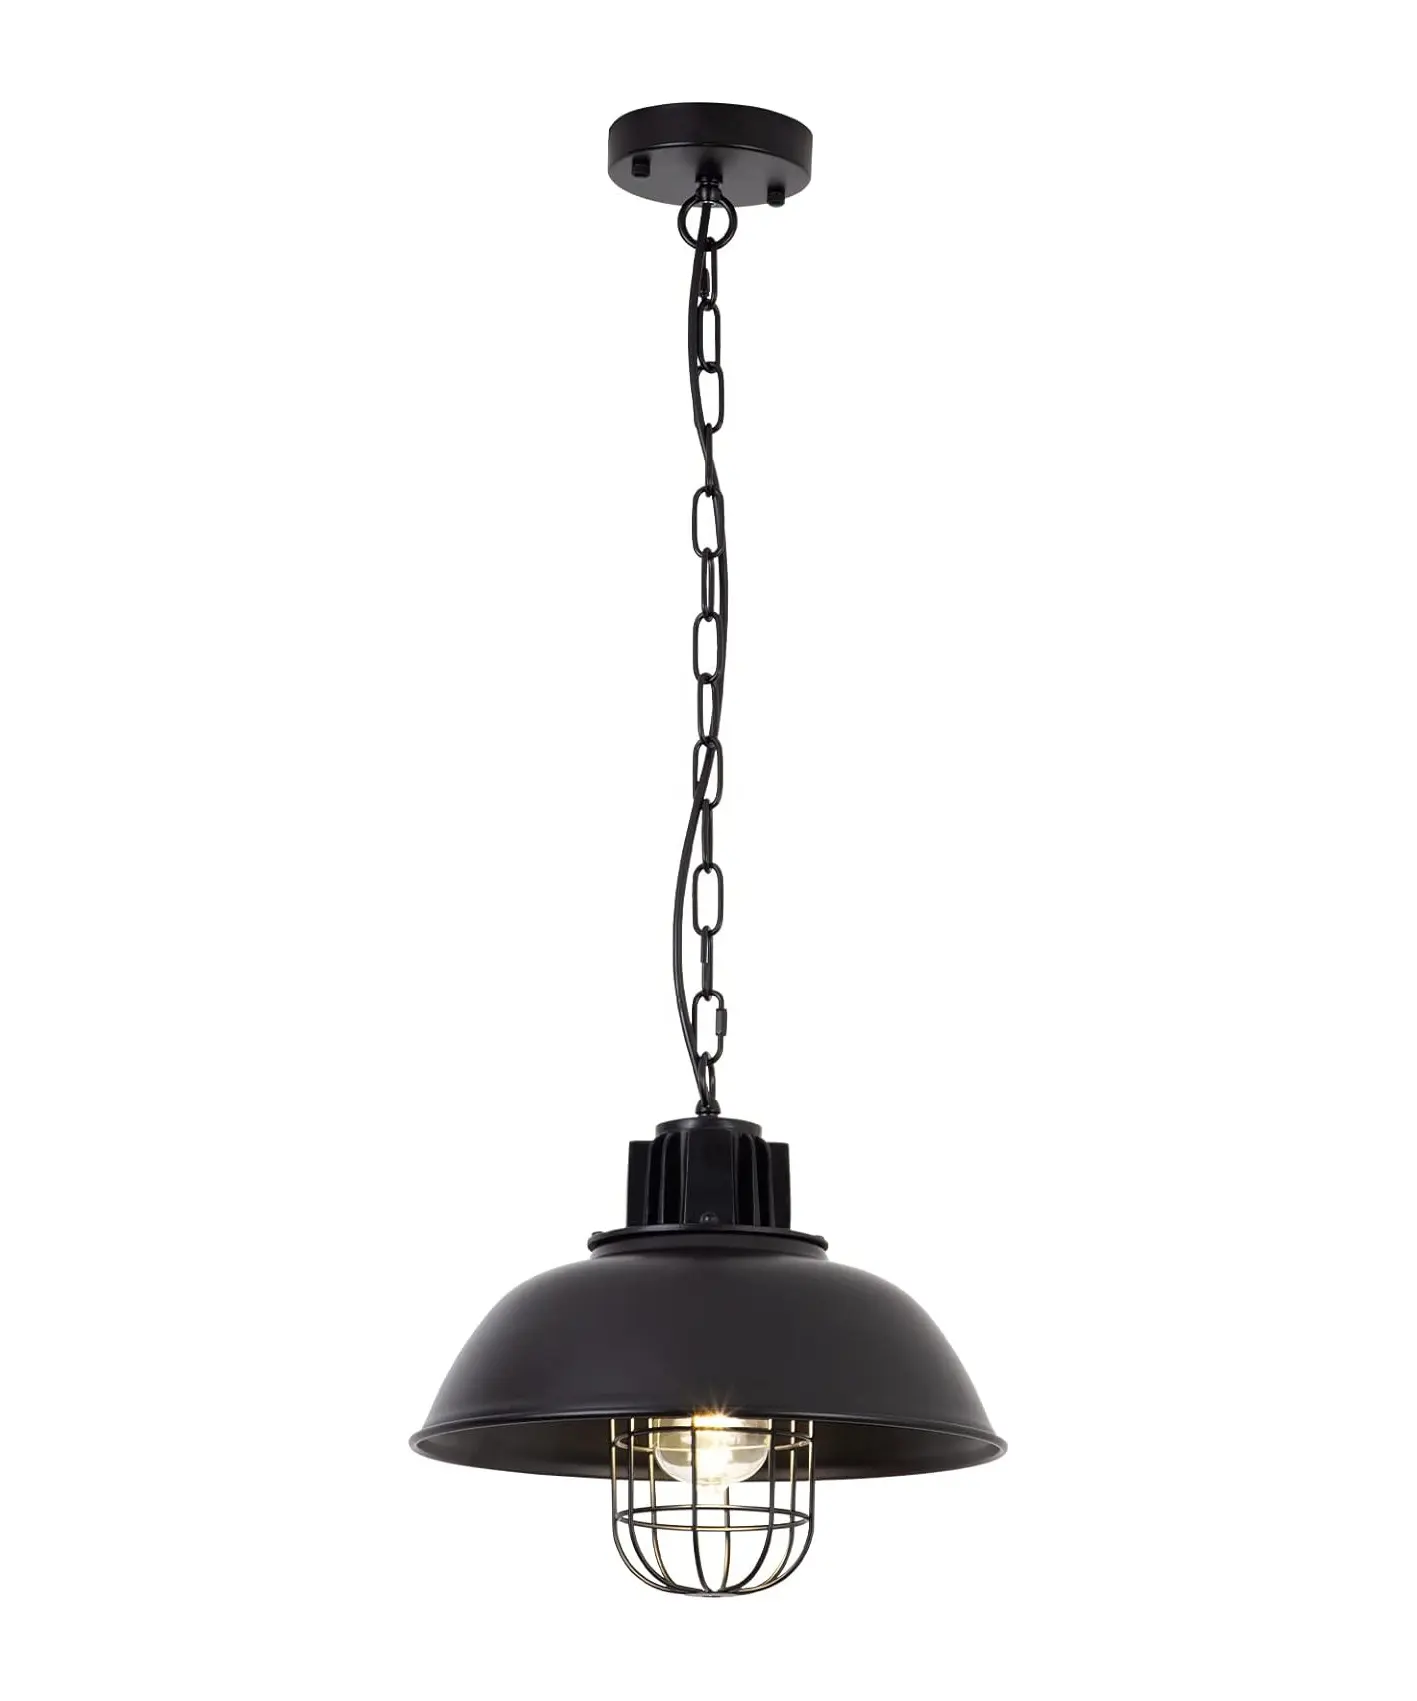 Woholitable Black Light Pendant, Metal Industrial Hanging Ceiling Light Fixture, Vintage Pendant Light